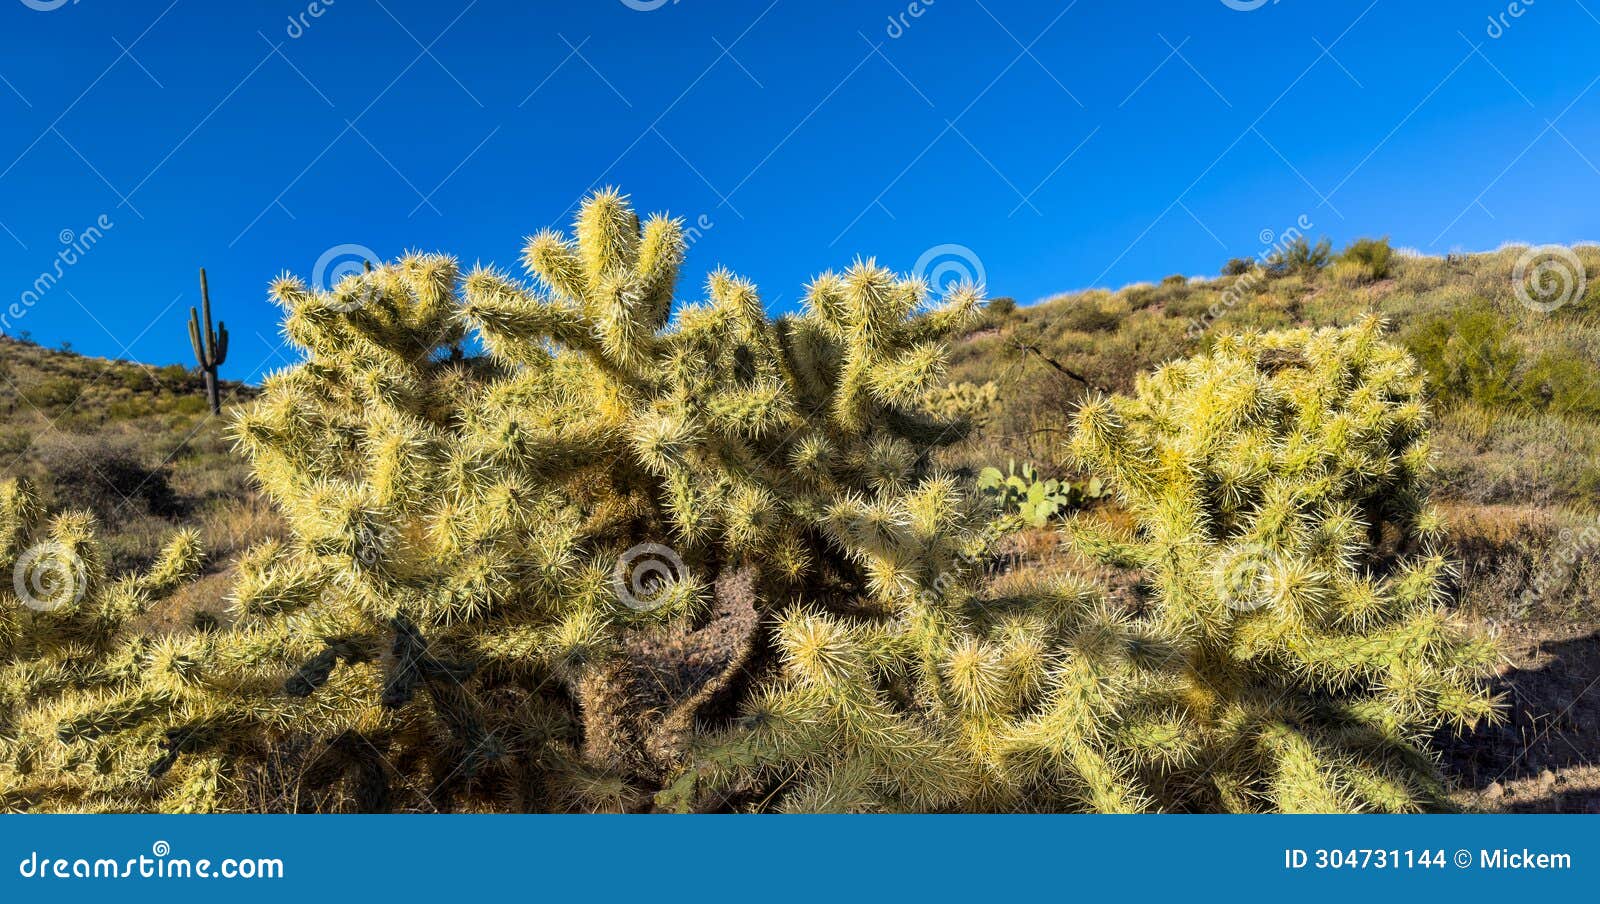 cactus cholla teddy bear panorama